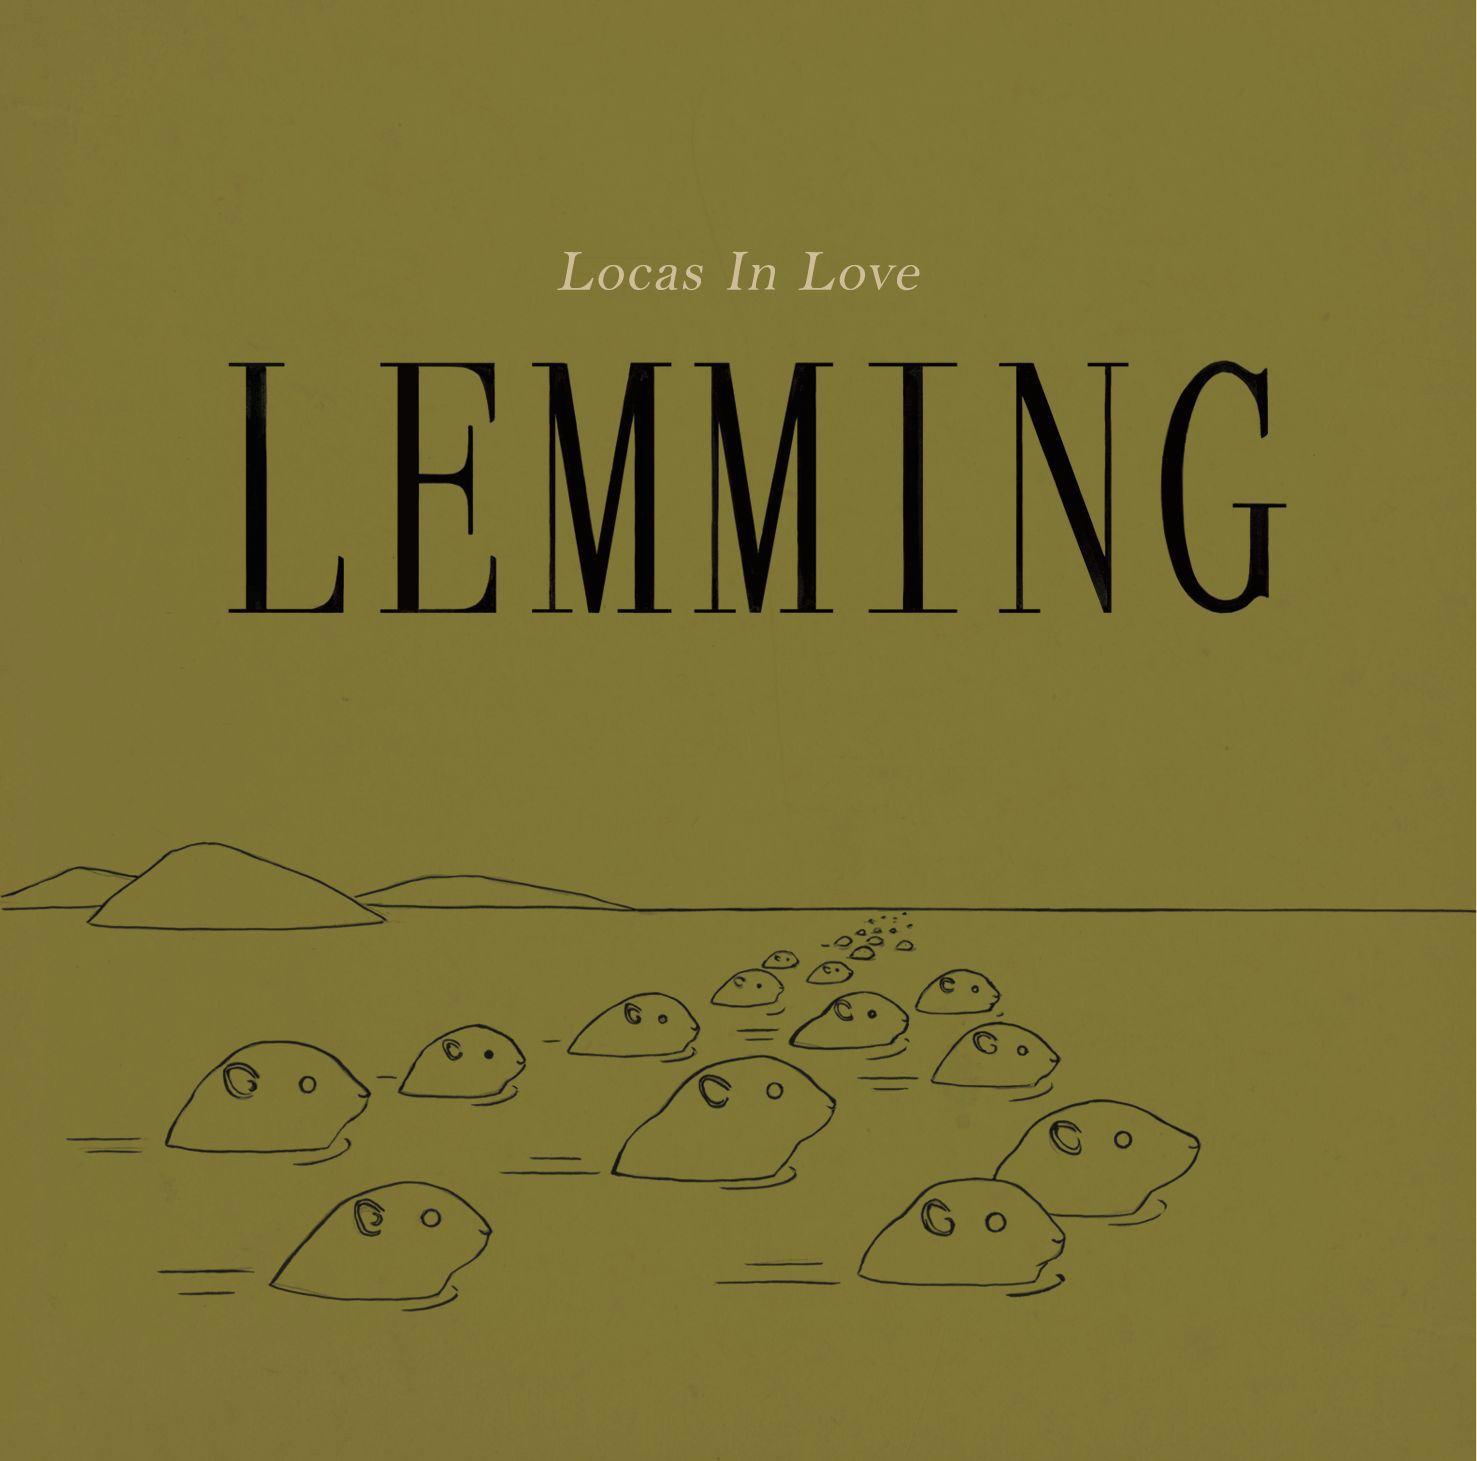 Locas in Love - Lemming